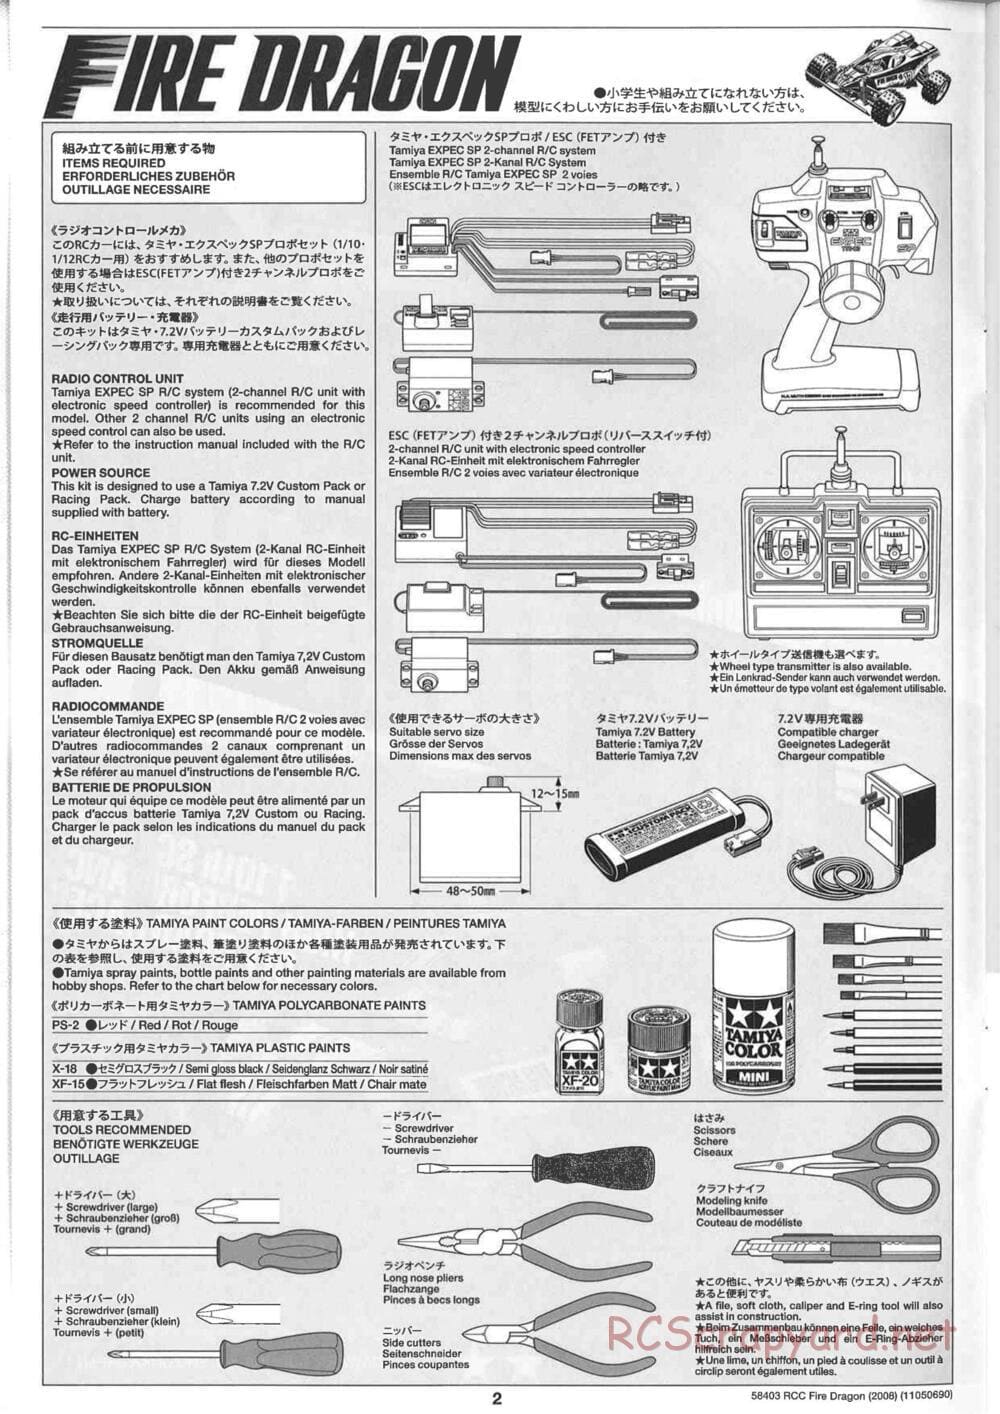 Tamiya - Fire Dragon 2008 - TS2 Chassis - Manual - Page 2